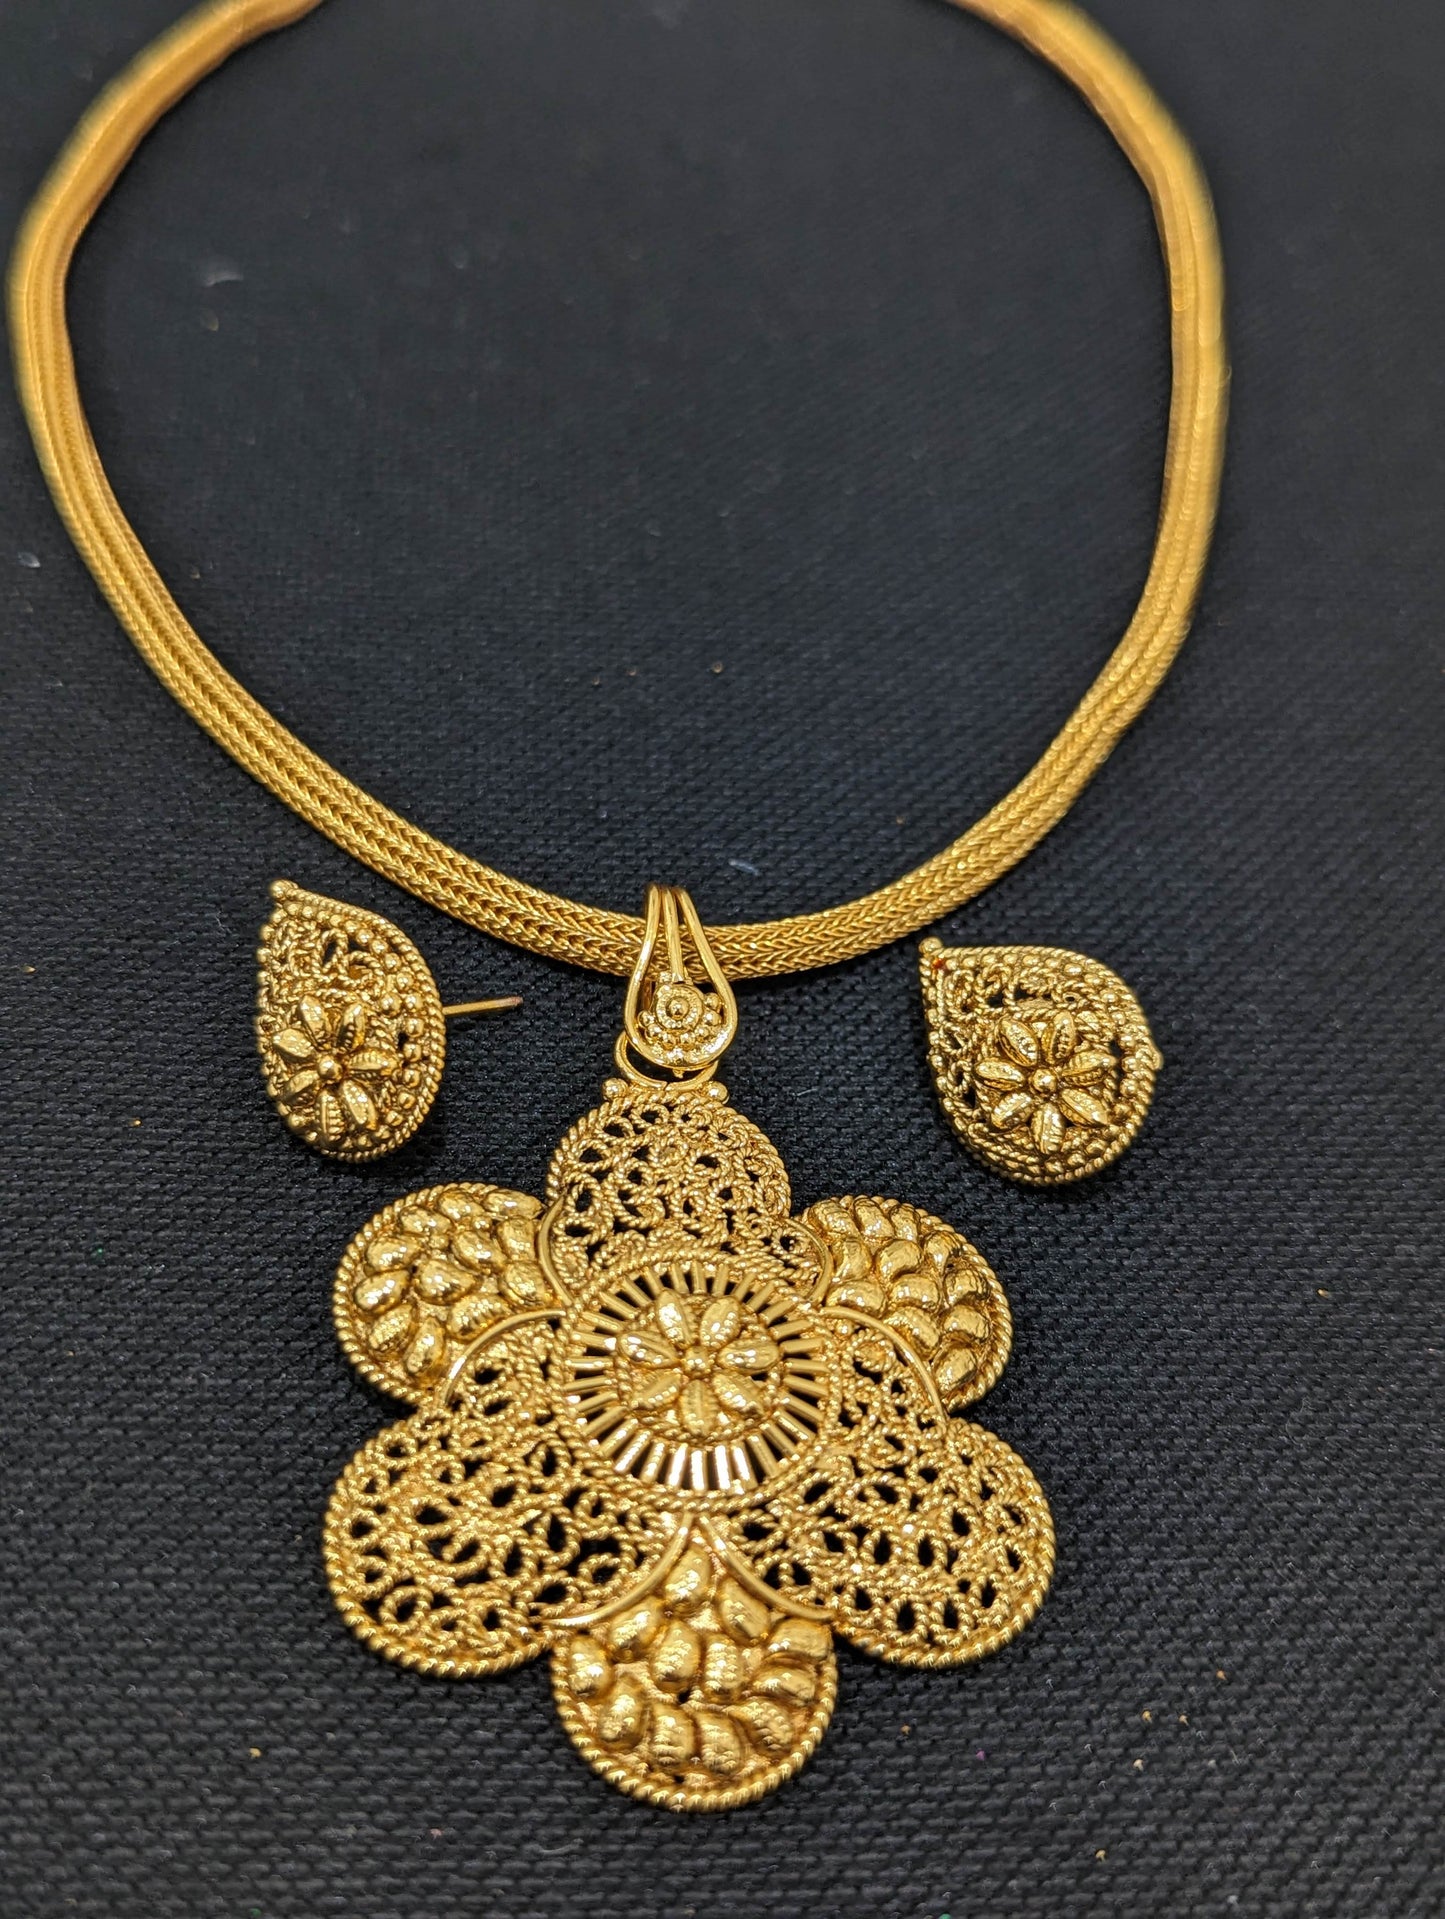 Gold look alike Pendant and Earrings Set - Design 4